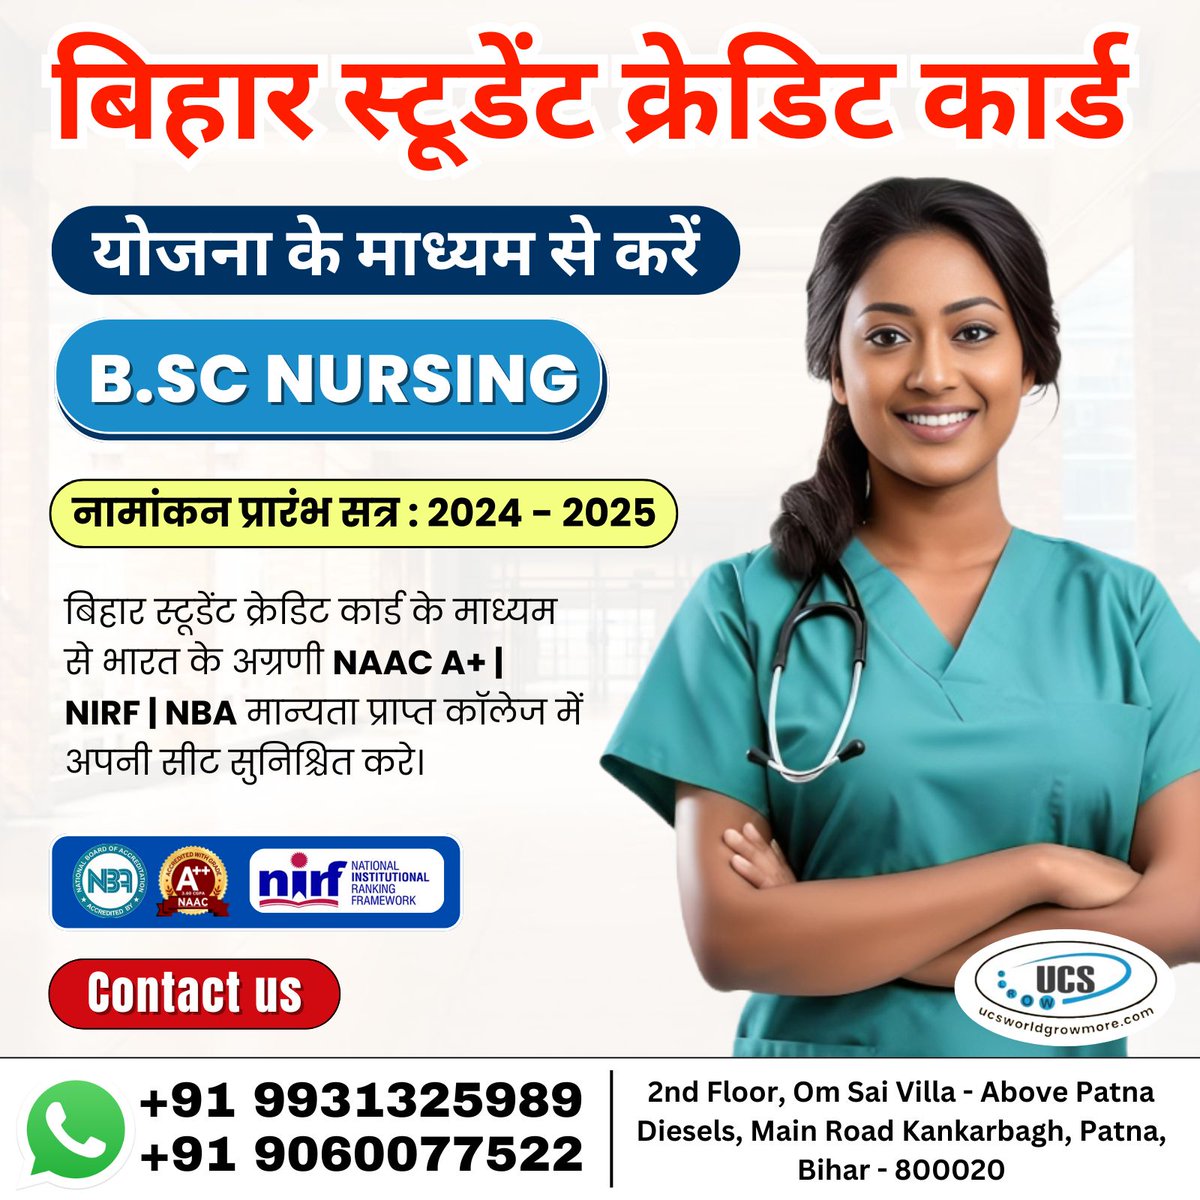 BSc Nursing 2024 Admission Open
To Know More Link Given Below👇
ucsworldgrowmore.com/bsc-nursing-in…
#BiharStudentCreditCardScheme #bscnursing #bscnursingadmission2024 #nursing #nursingstudent #nursingadmision2024 #bscnursingdegree #GNMNursing #bscnursinginbihar #ucsworldgrowmore